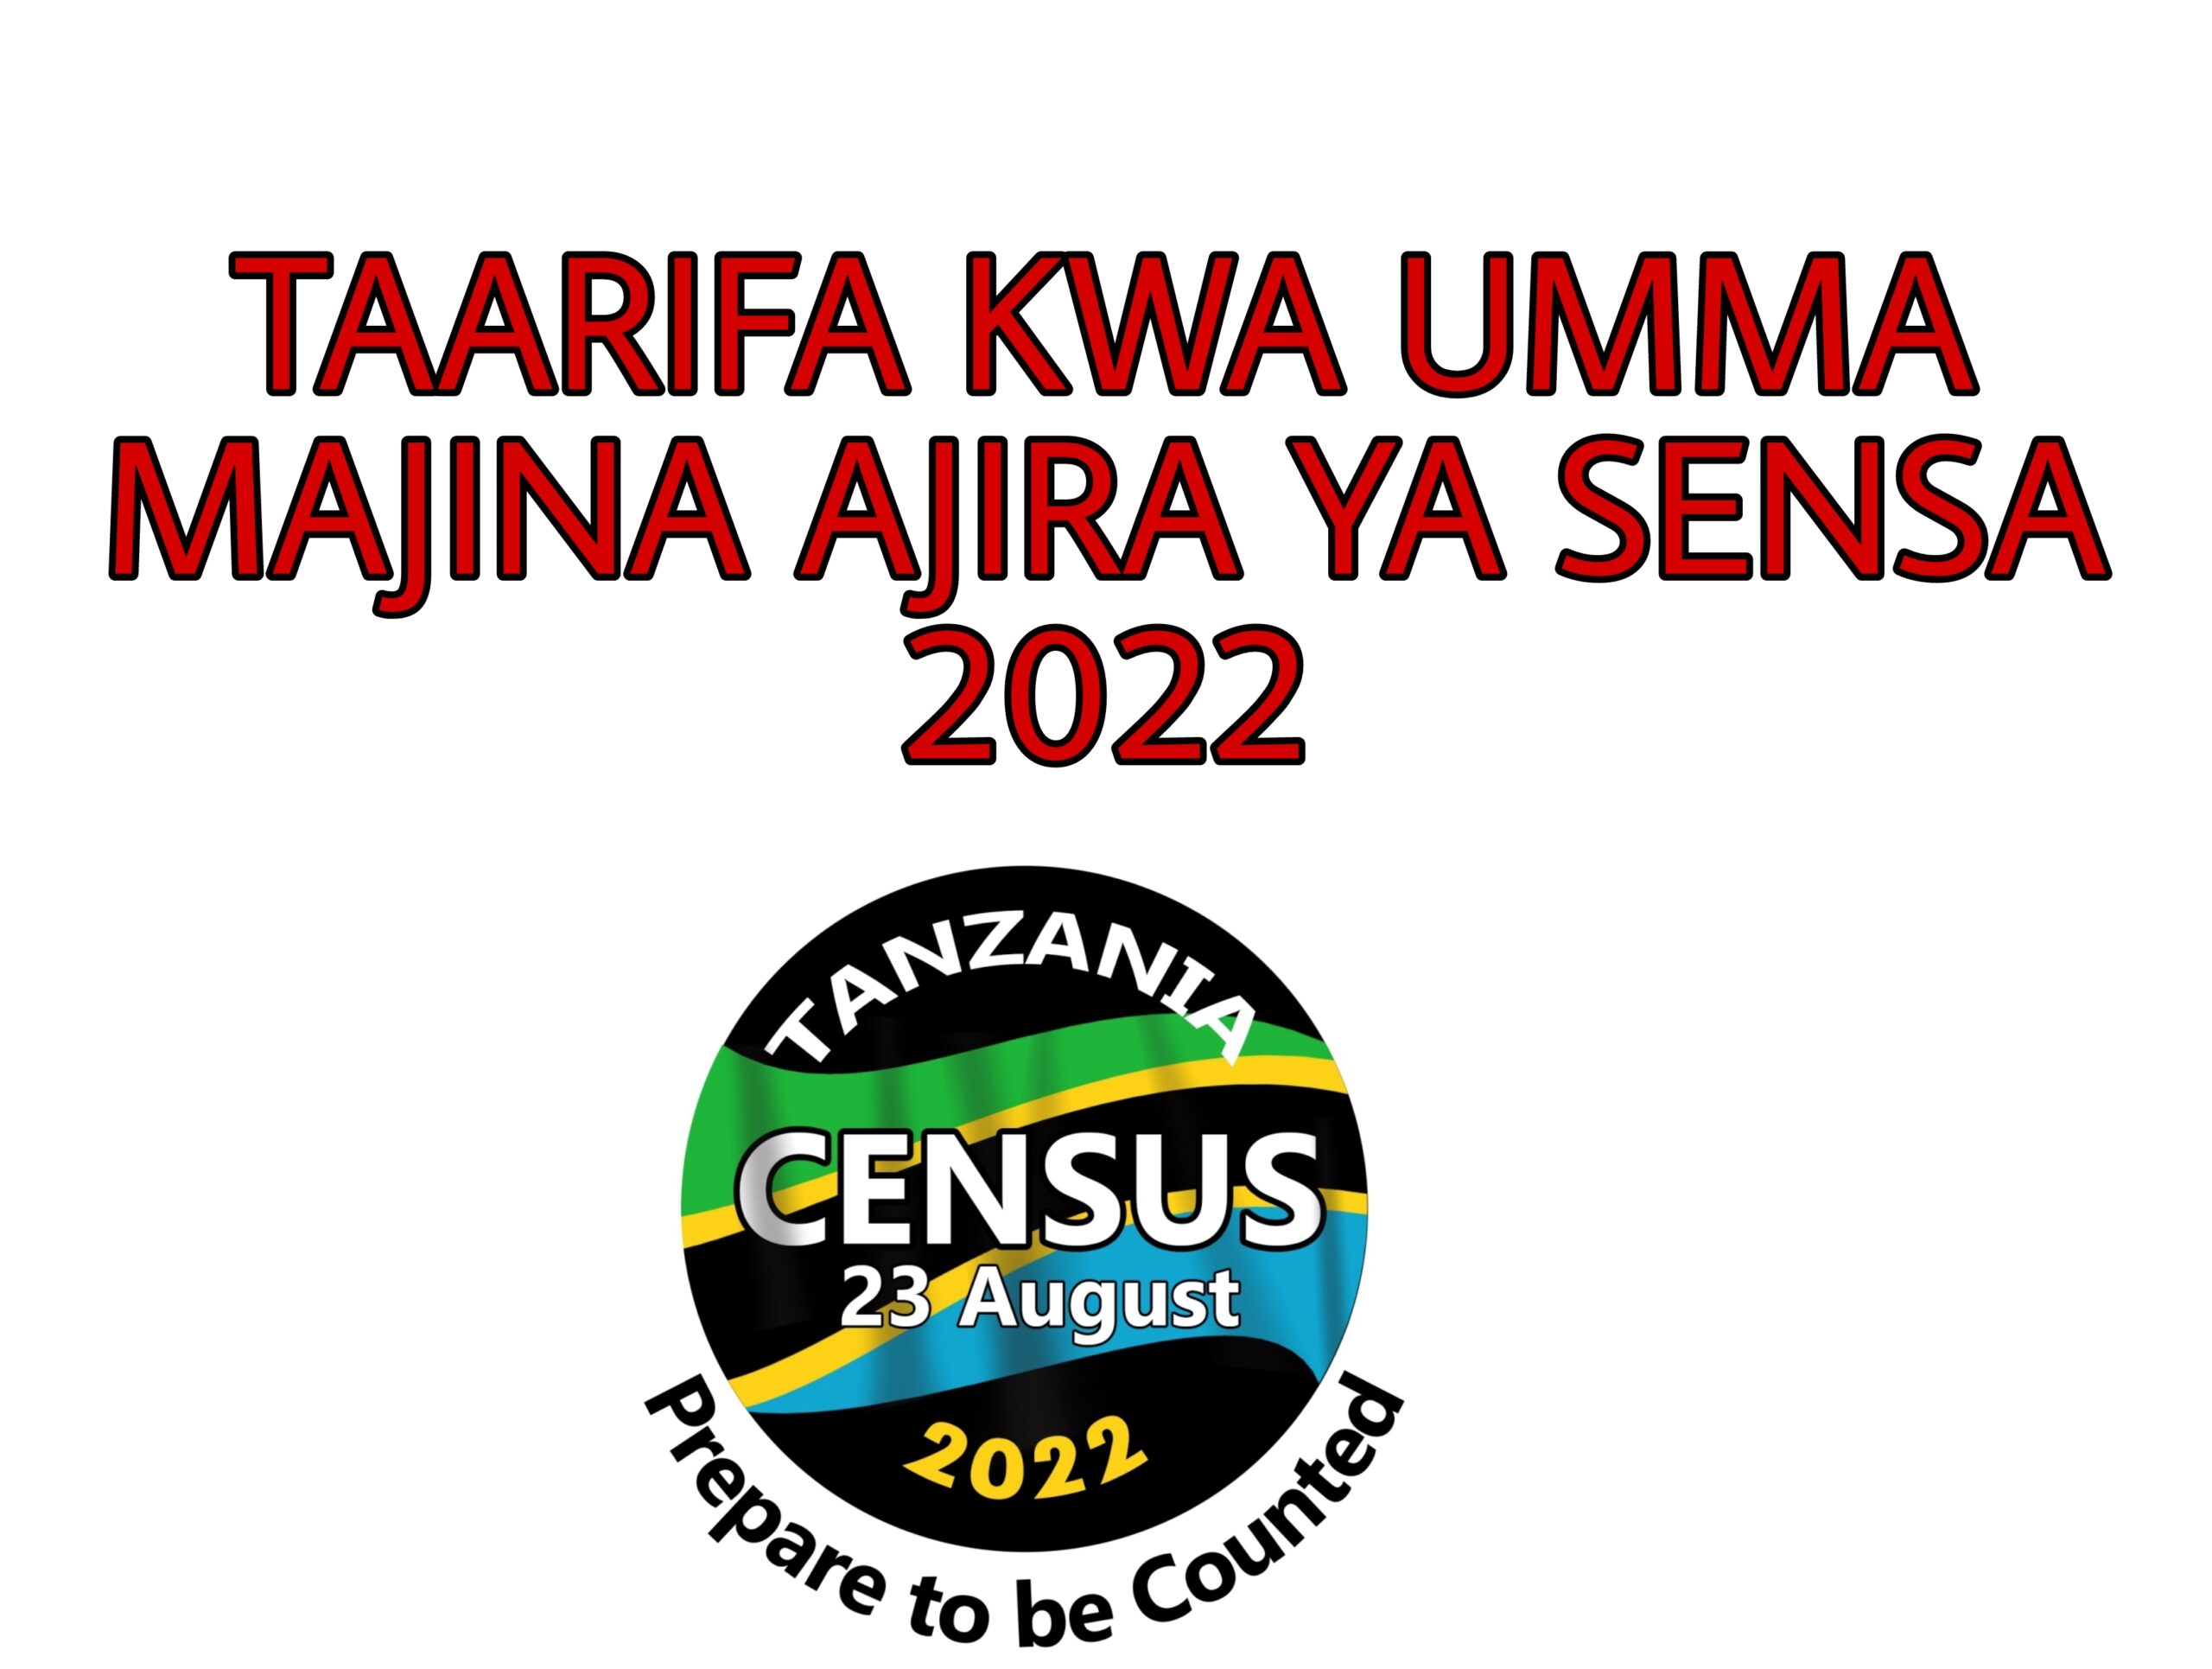 Public Notice Majina Ajira Za Sensa 2022